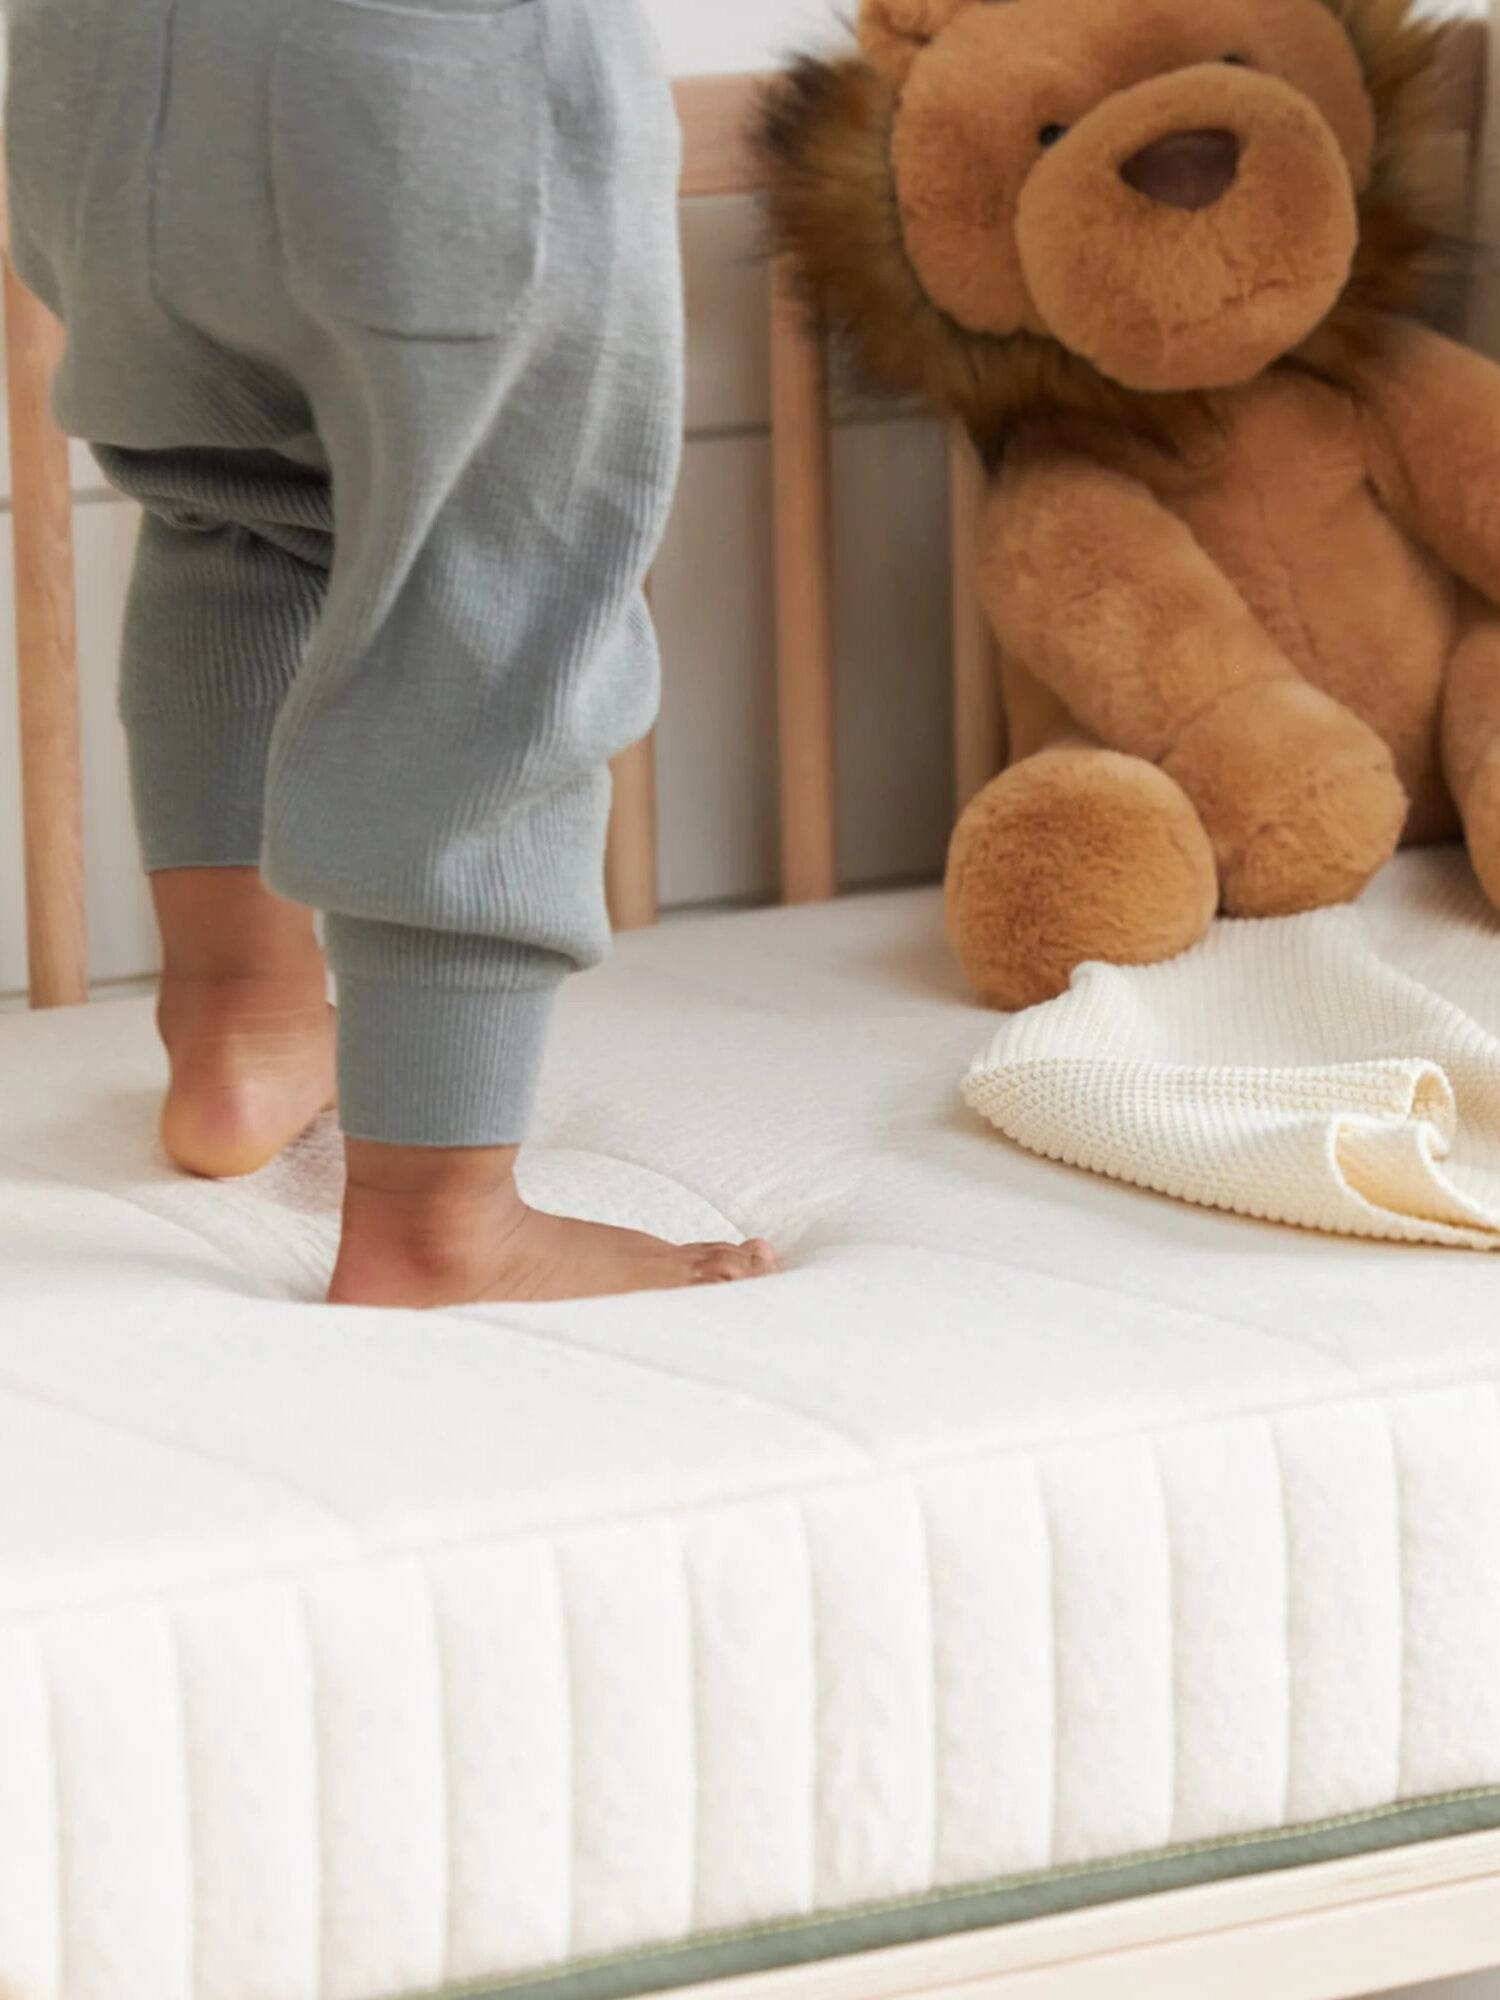 A child's feet stand on a crib mattress